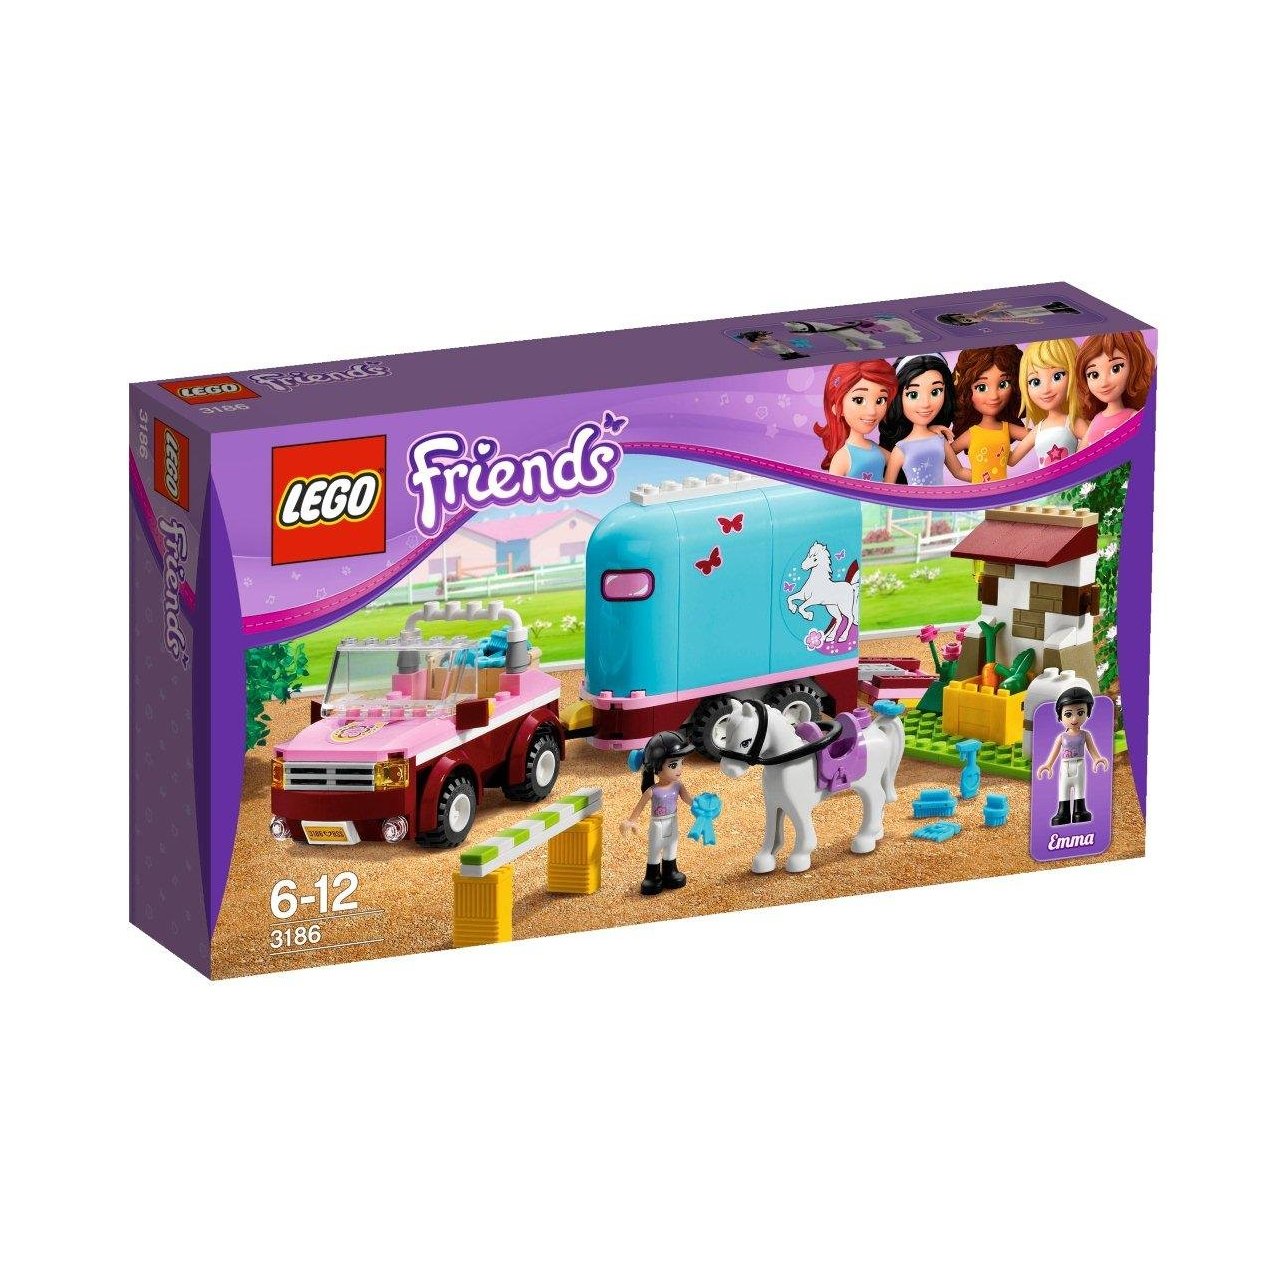 LEGO Friends Inspire Girls Globally: Friends sets 2012